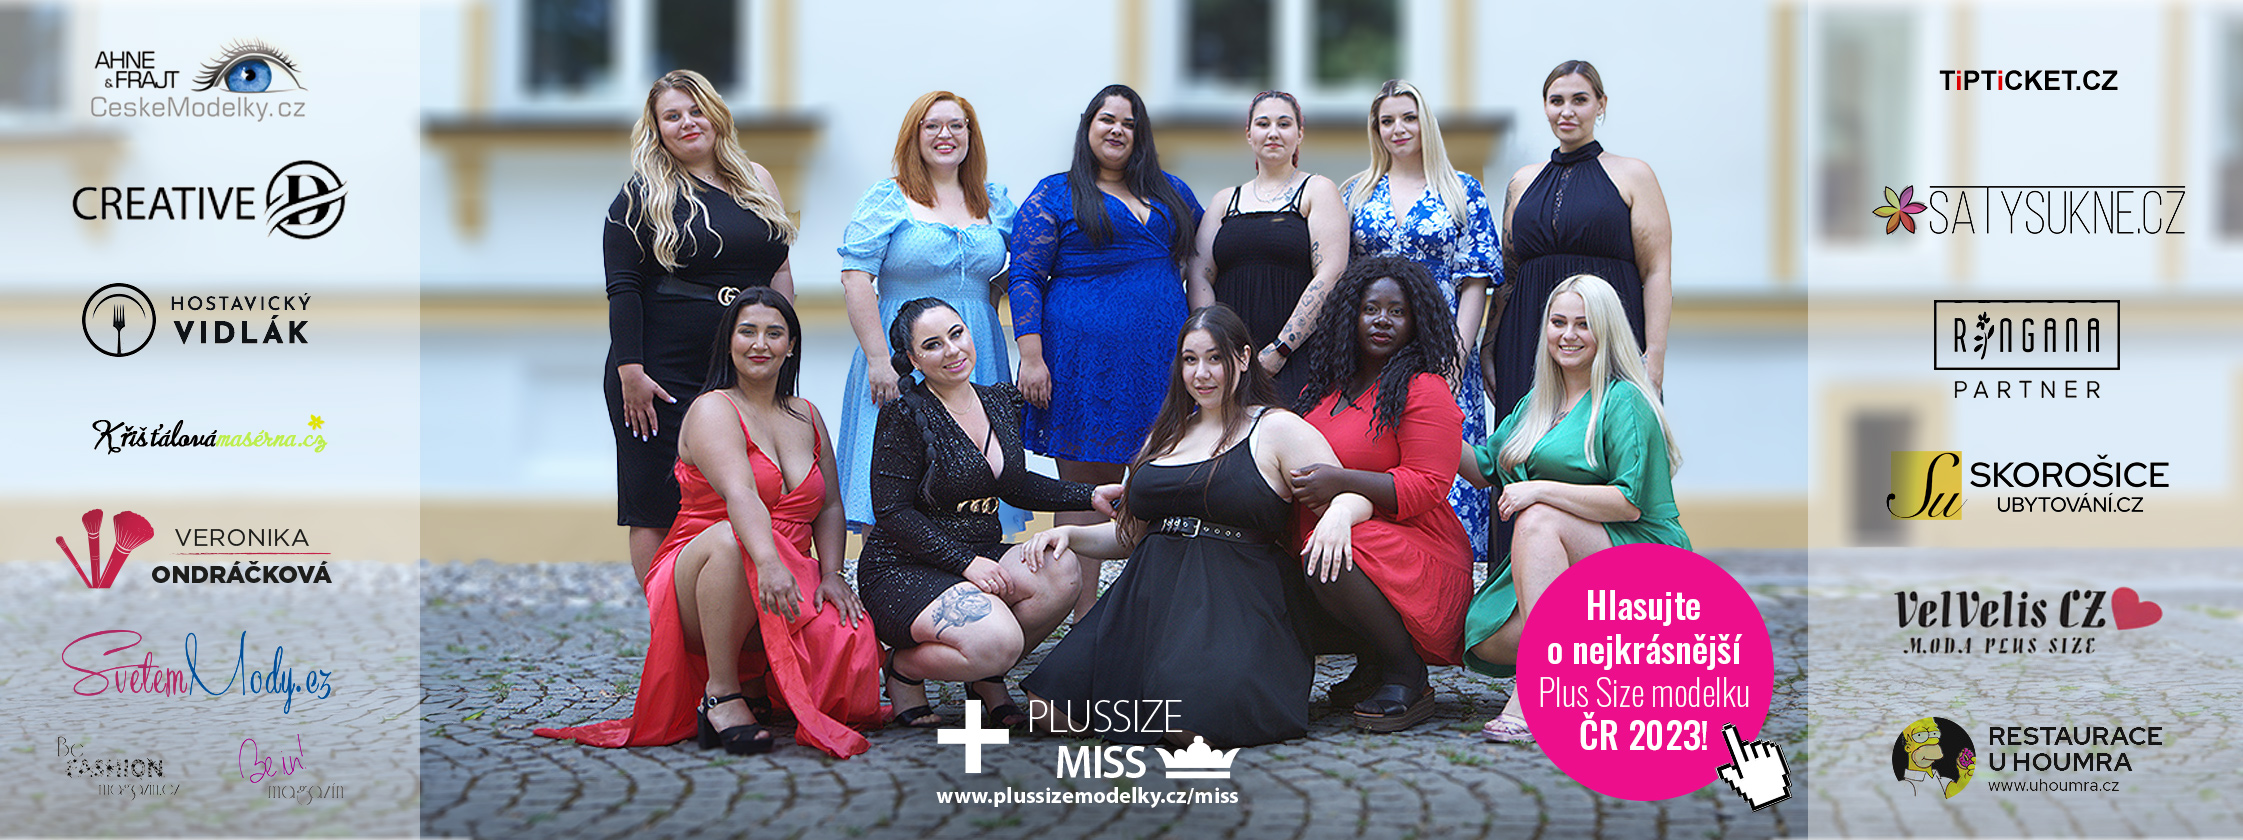 Znme finalistky tvrtho ronku soute Miss Plus Size modelky R 2023!